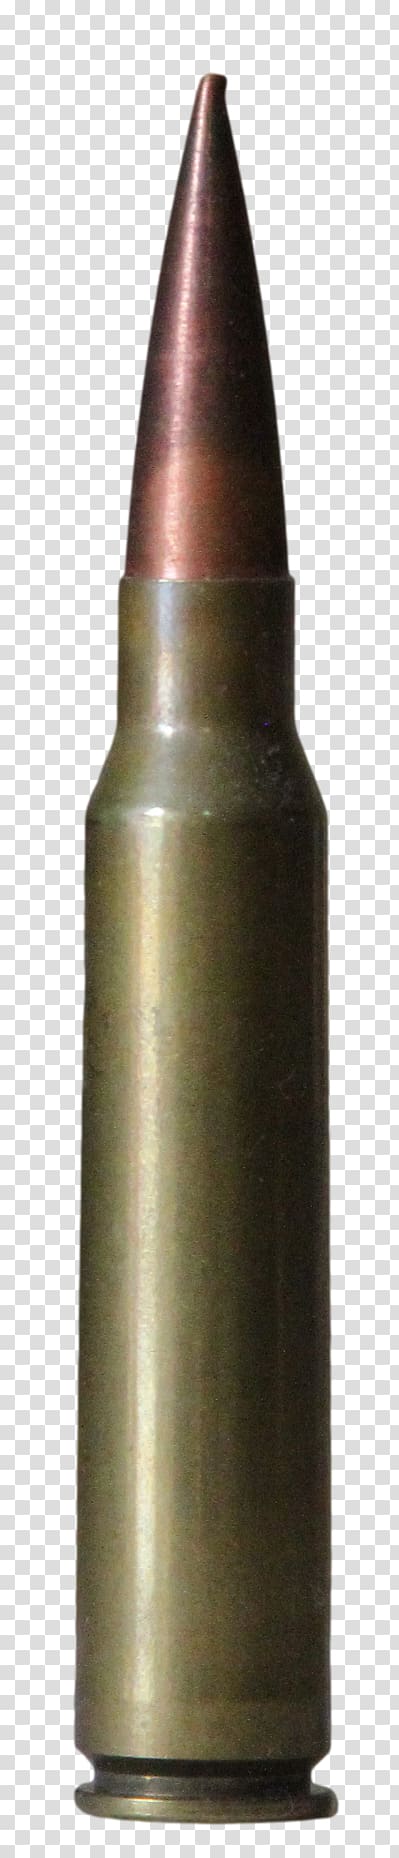 Bullet .408 Cheyenne Tactical Sniper CheyTac Intervention Ammunition, ammunition transparent background PNG clipart